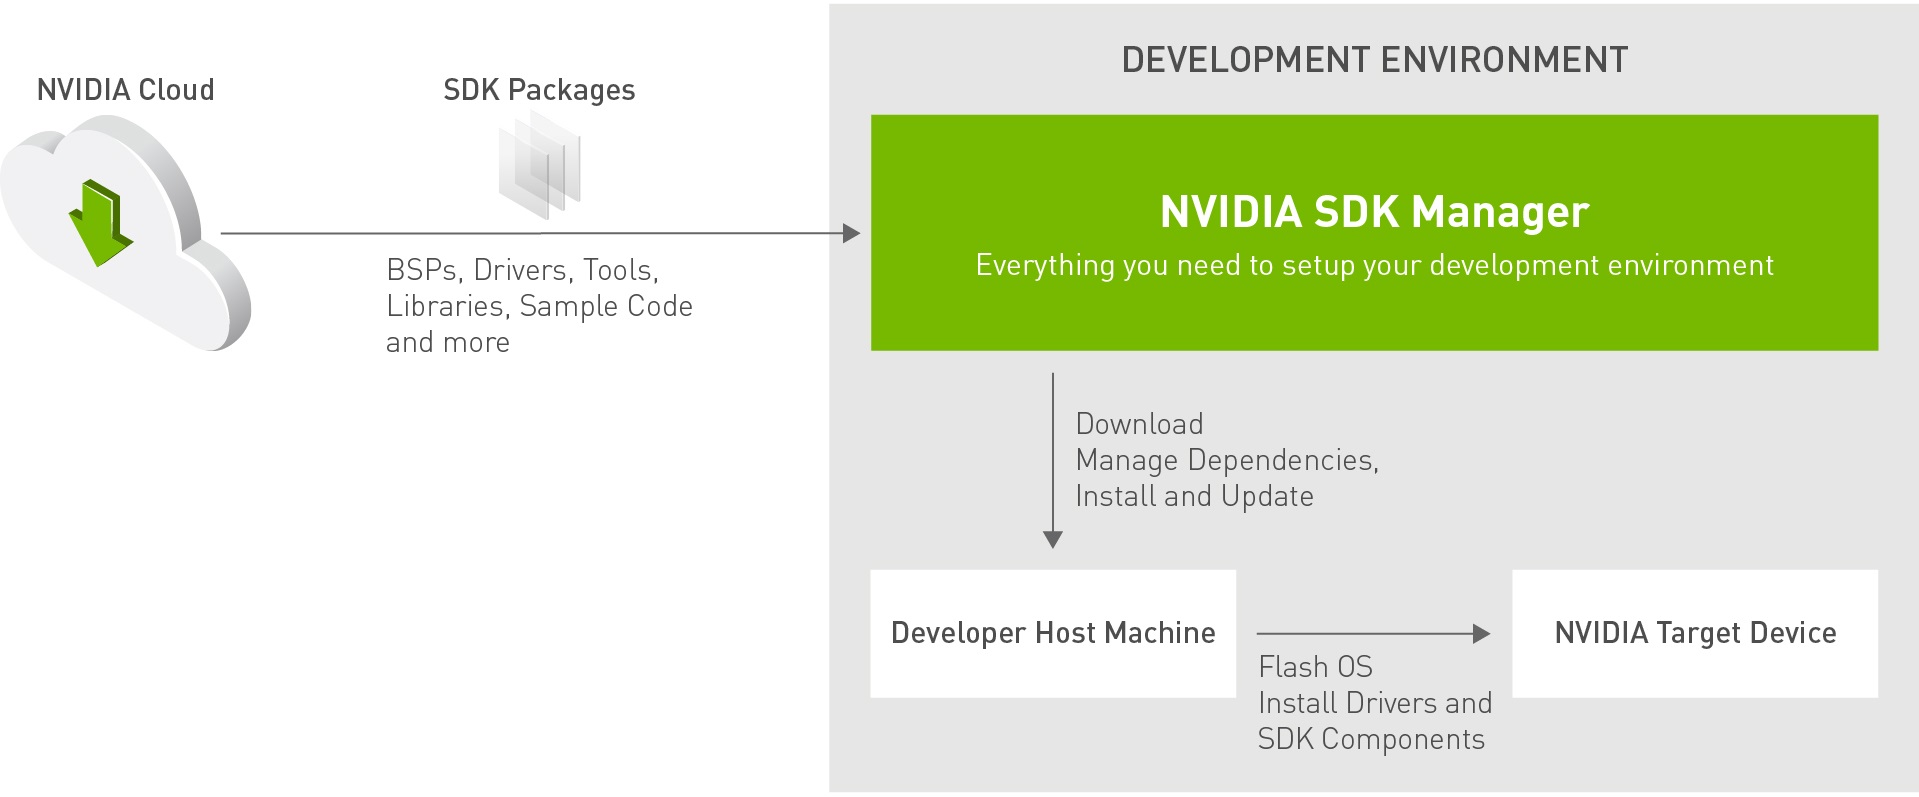 NVIDIA SDK Manager development environment setup solution